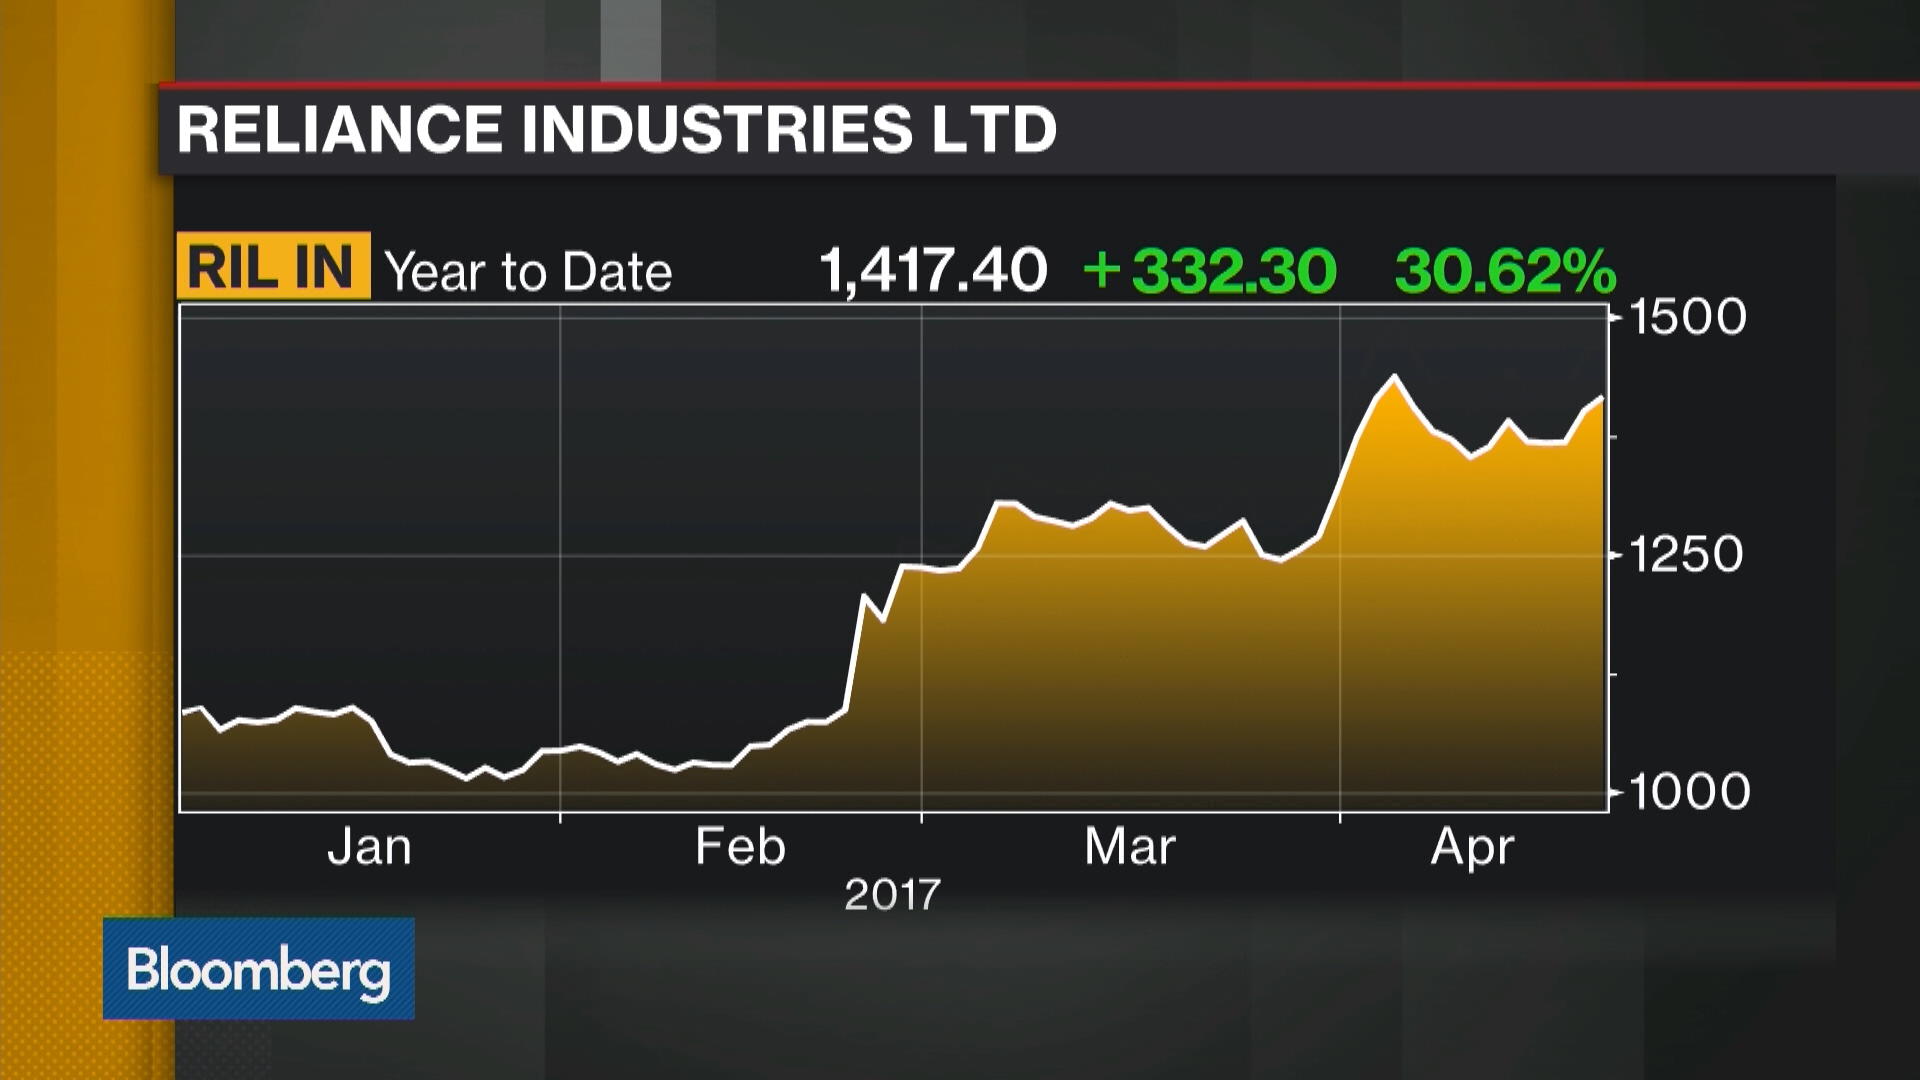 Chart Industries Stock Symbol